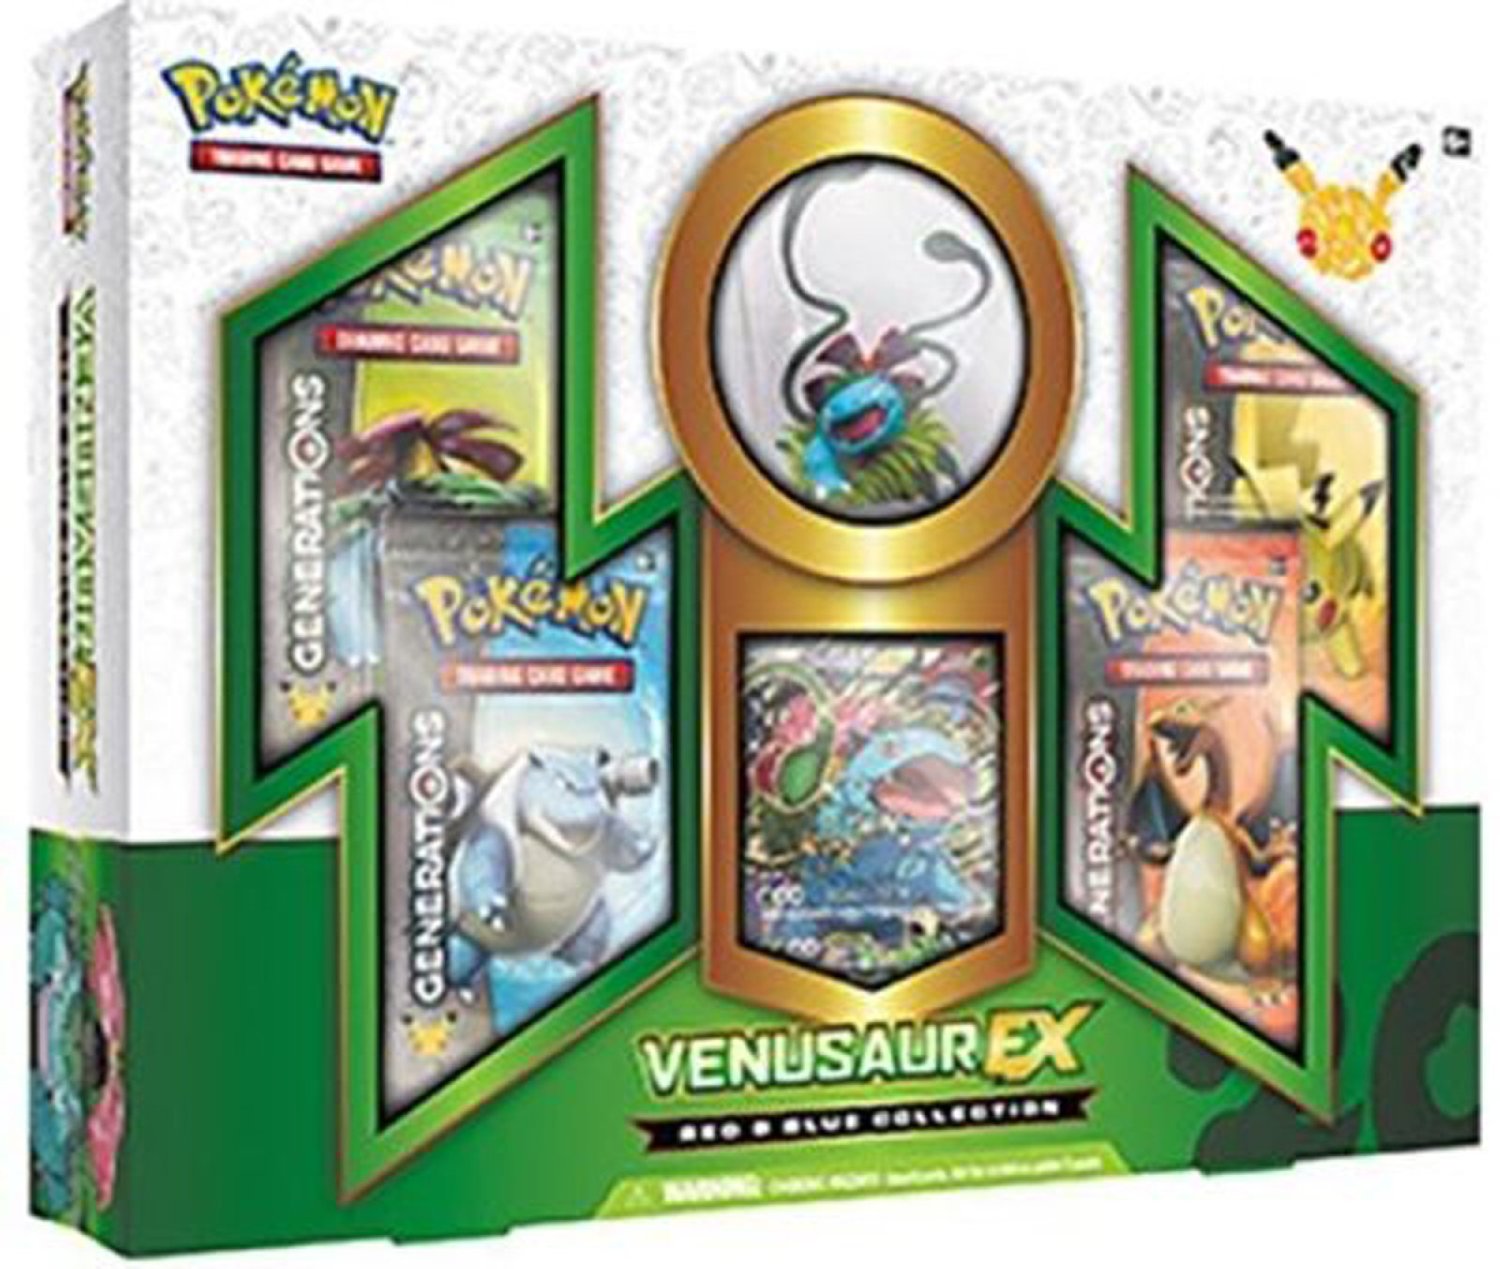 Pokemon Venusaur EX 'Red & Blue Collection' Box Set